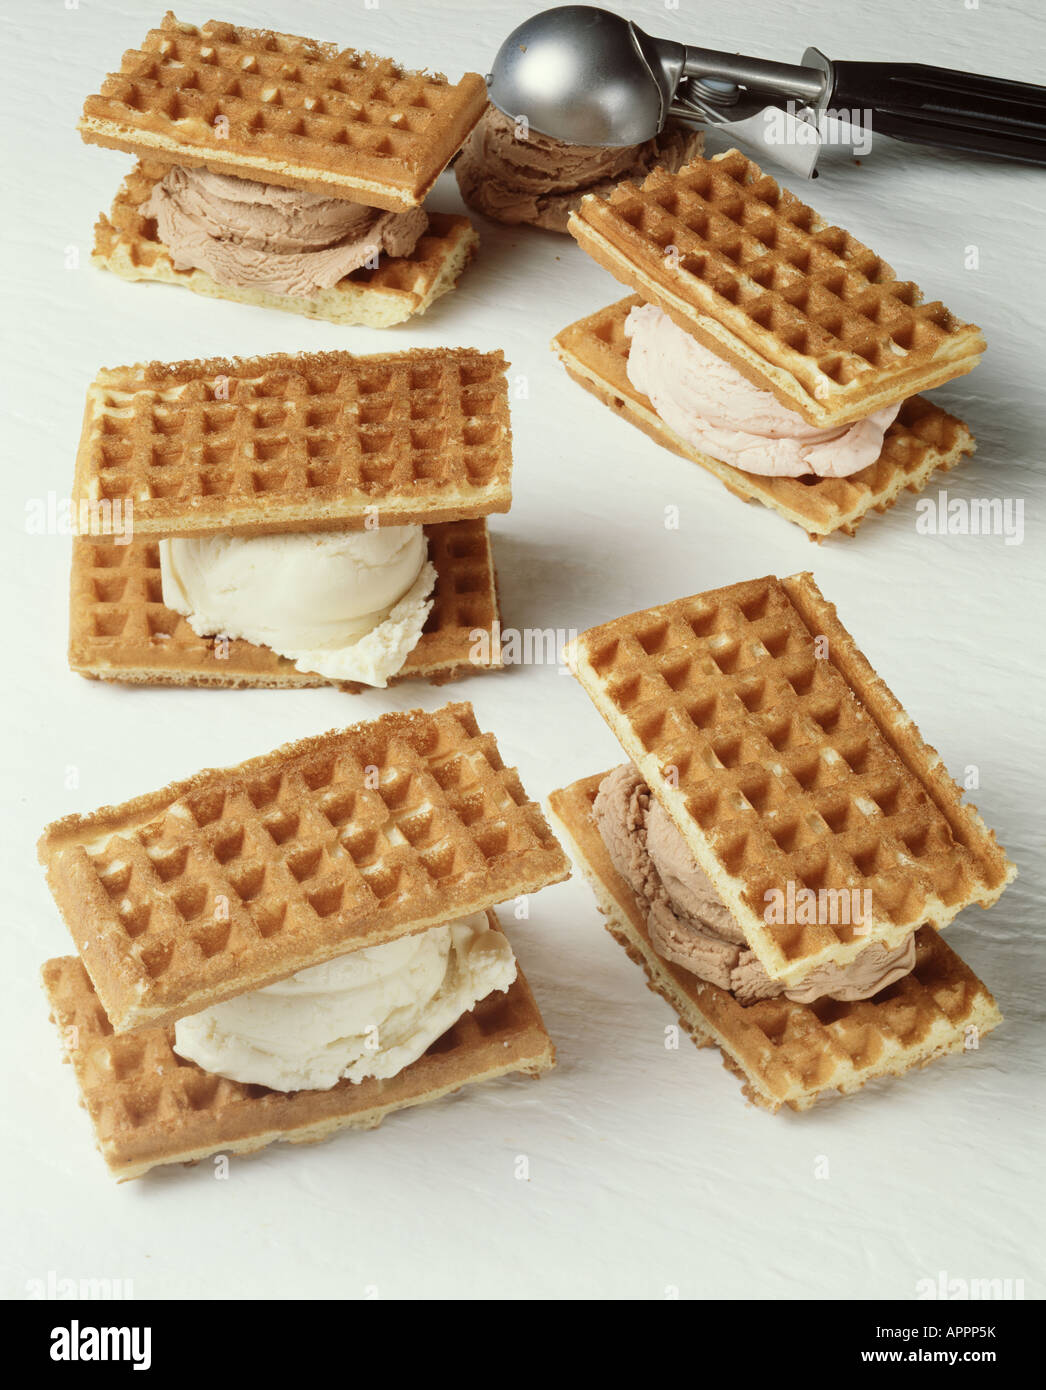 https://c8.alamy.com/comp/APPP5K/belgian-waffle-ice-cream-sandwich-with-scoop-APPP5K.jpg